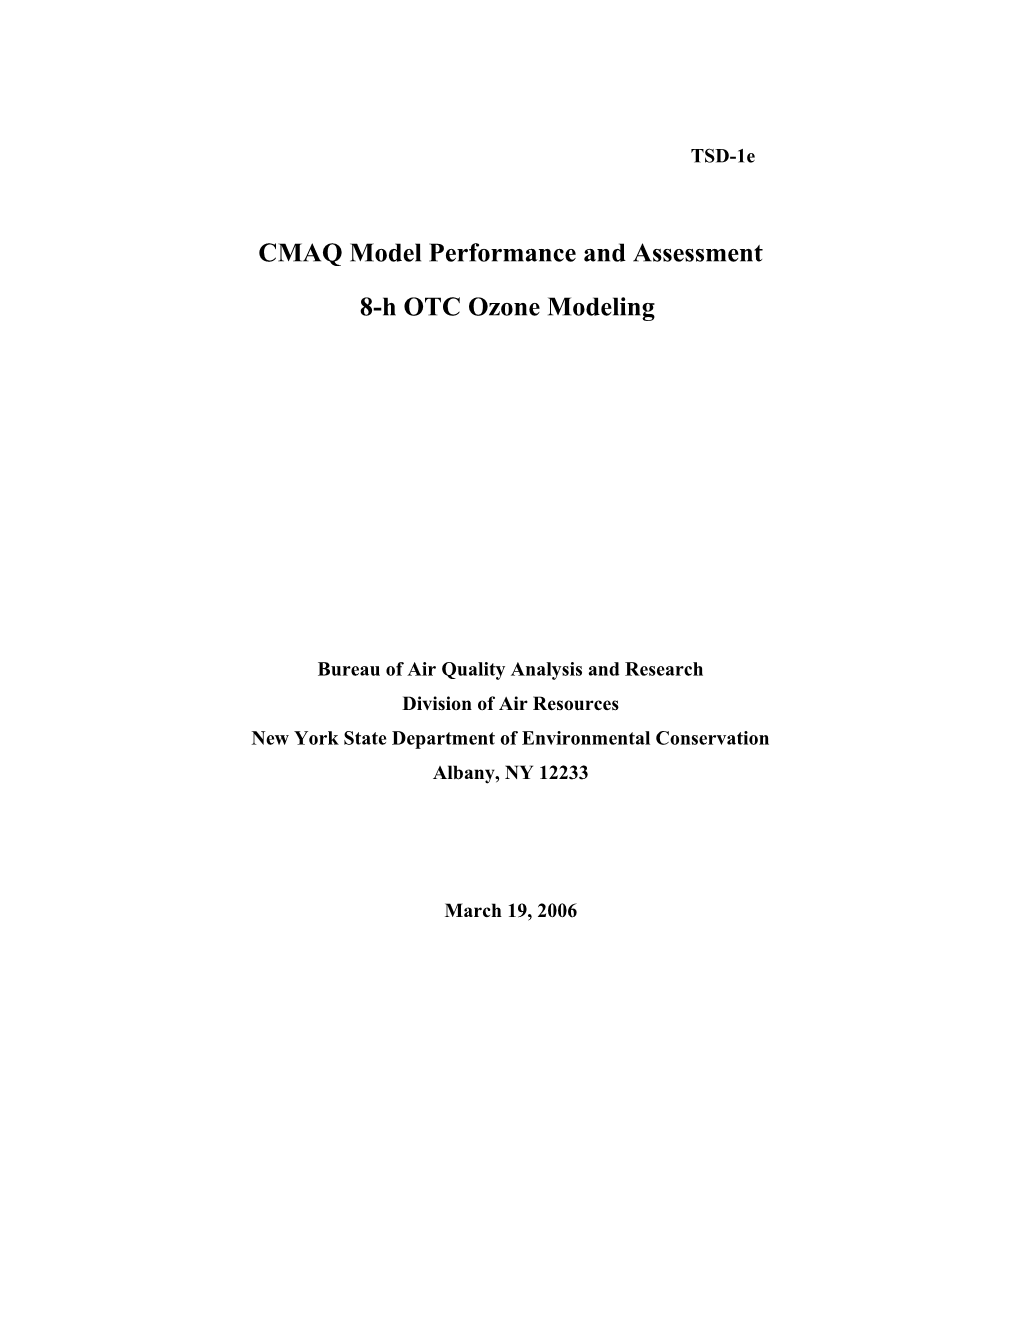 CMAQ Model Performance and Assessment